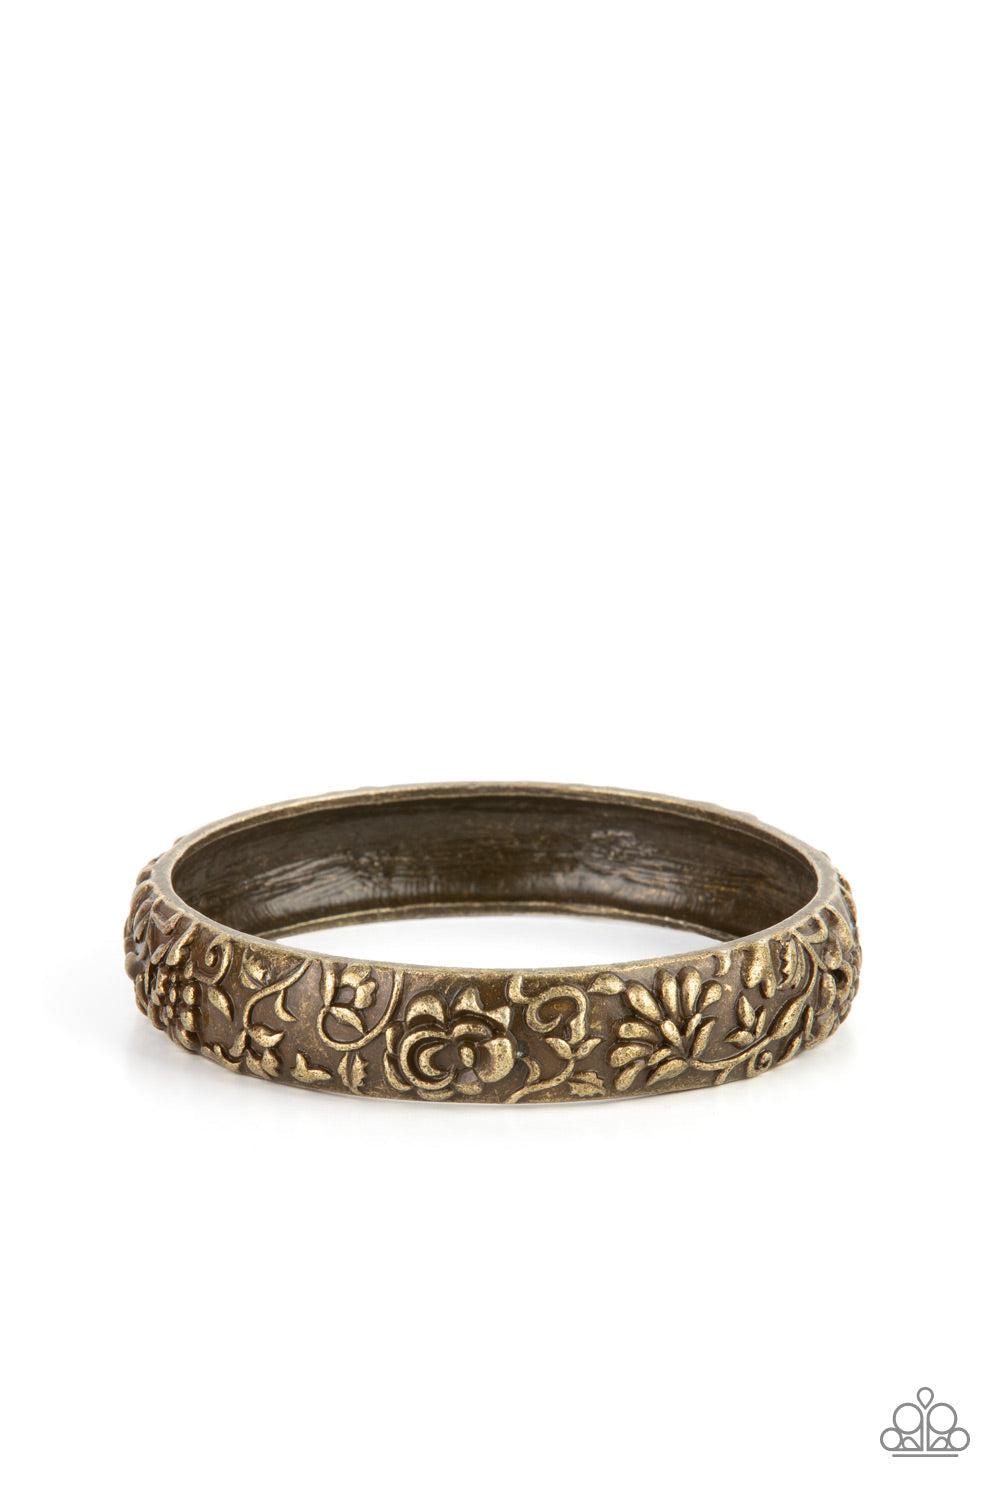 Victorian Meadow Brass Bracelet - Paparazzi Accessories- lightbox - CarasShop.com - $5 Jewelry by Cara Jewels